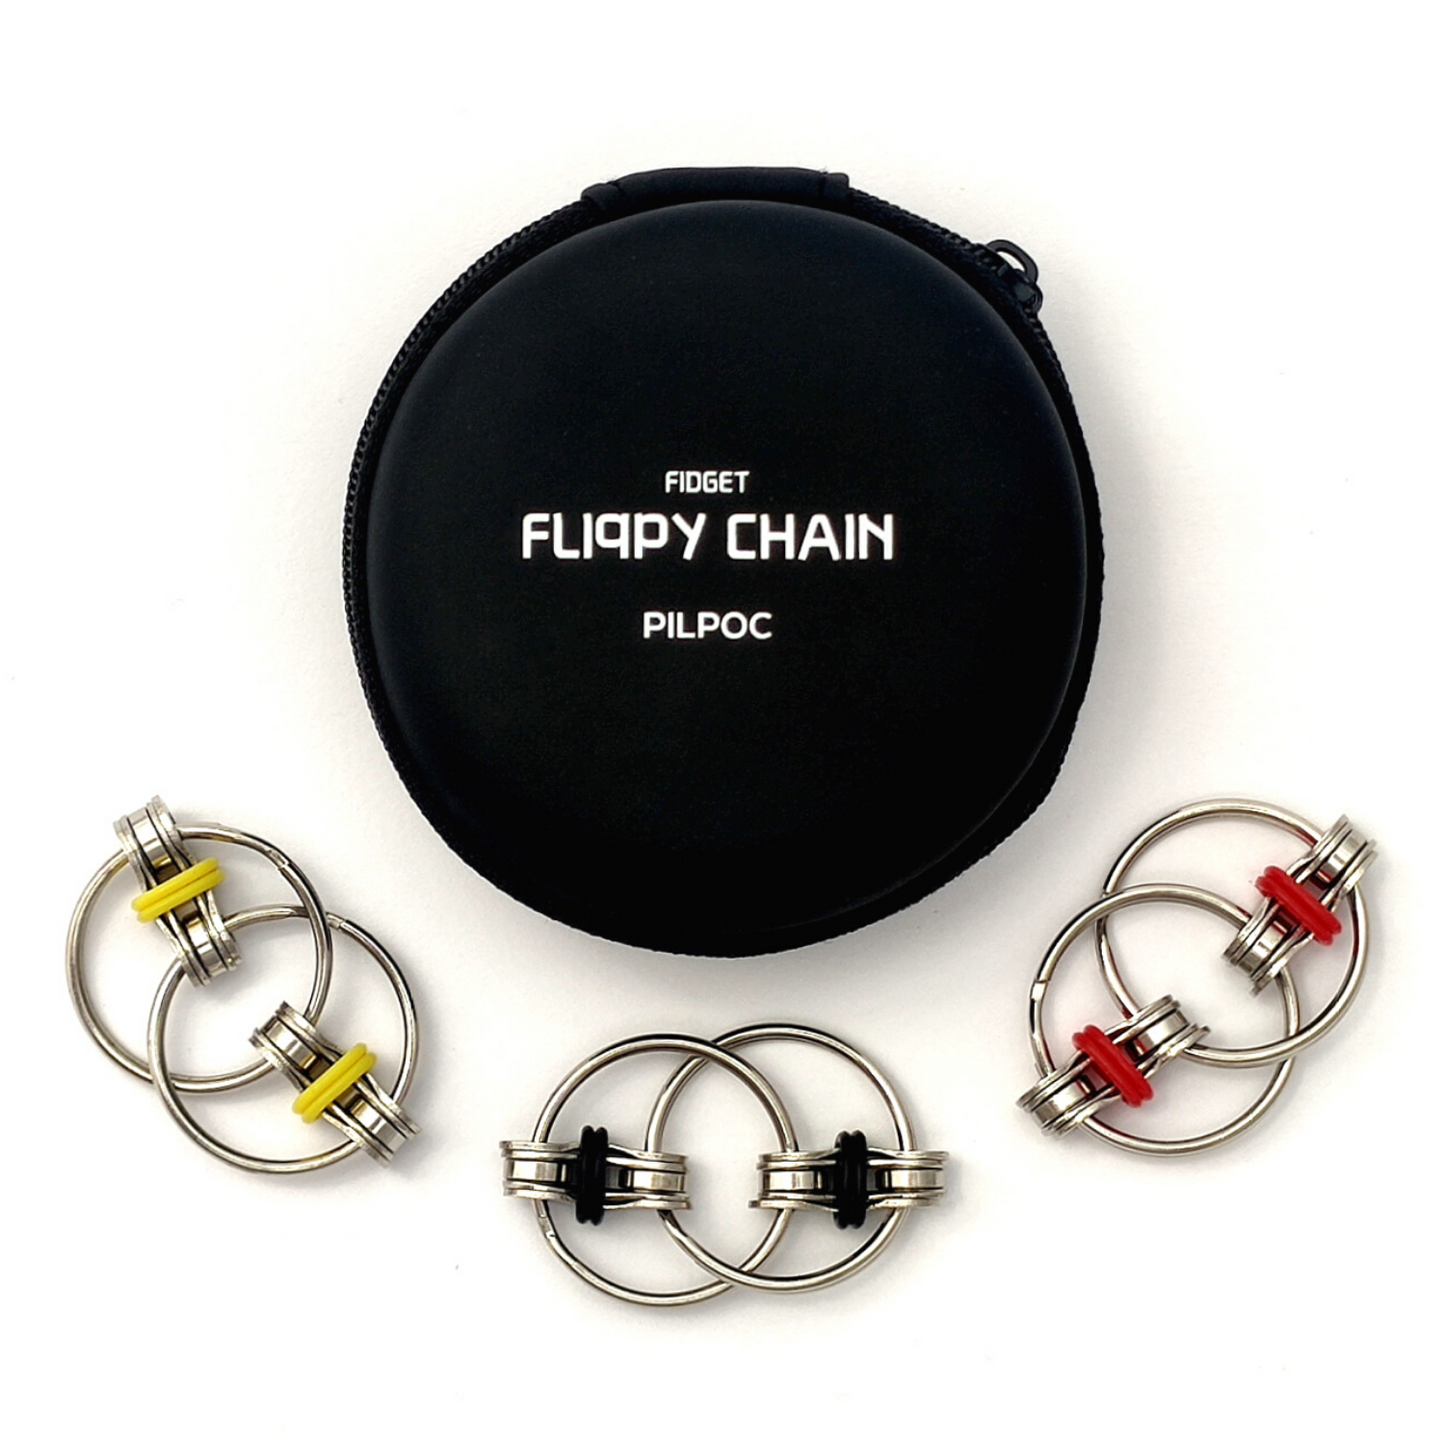 Fidget flippy chain